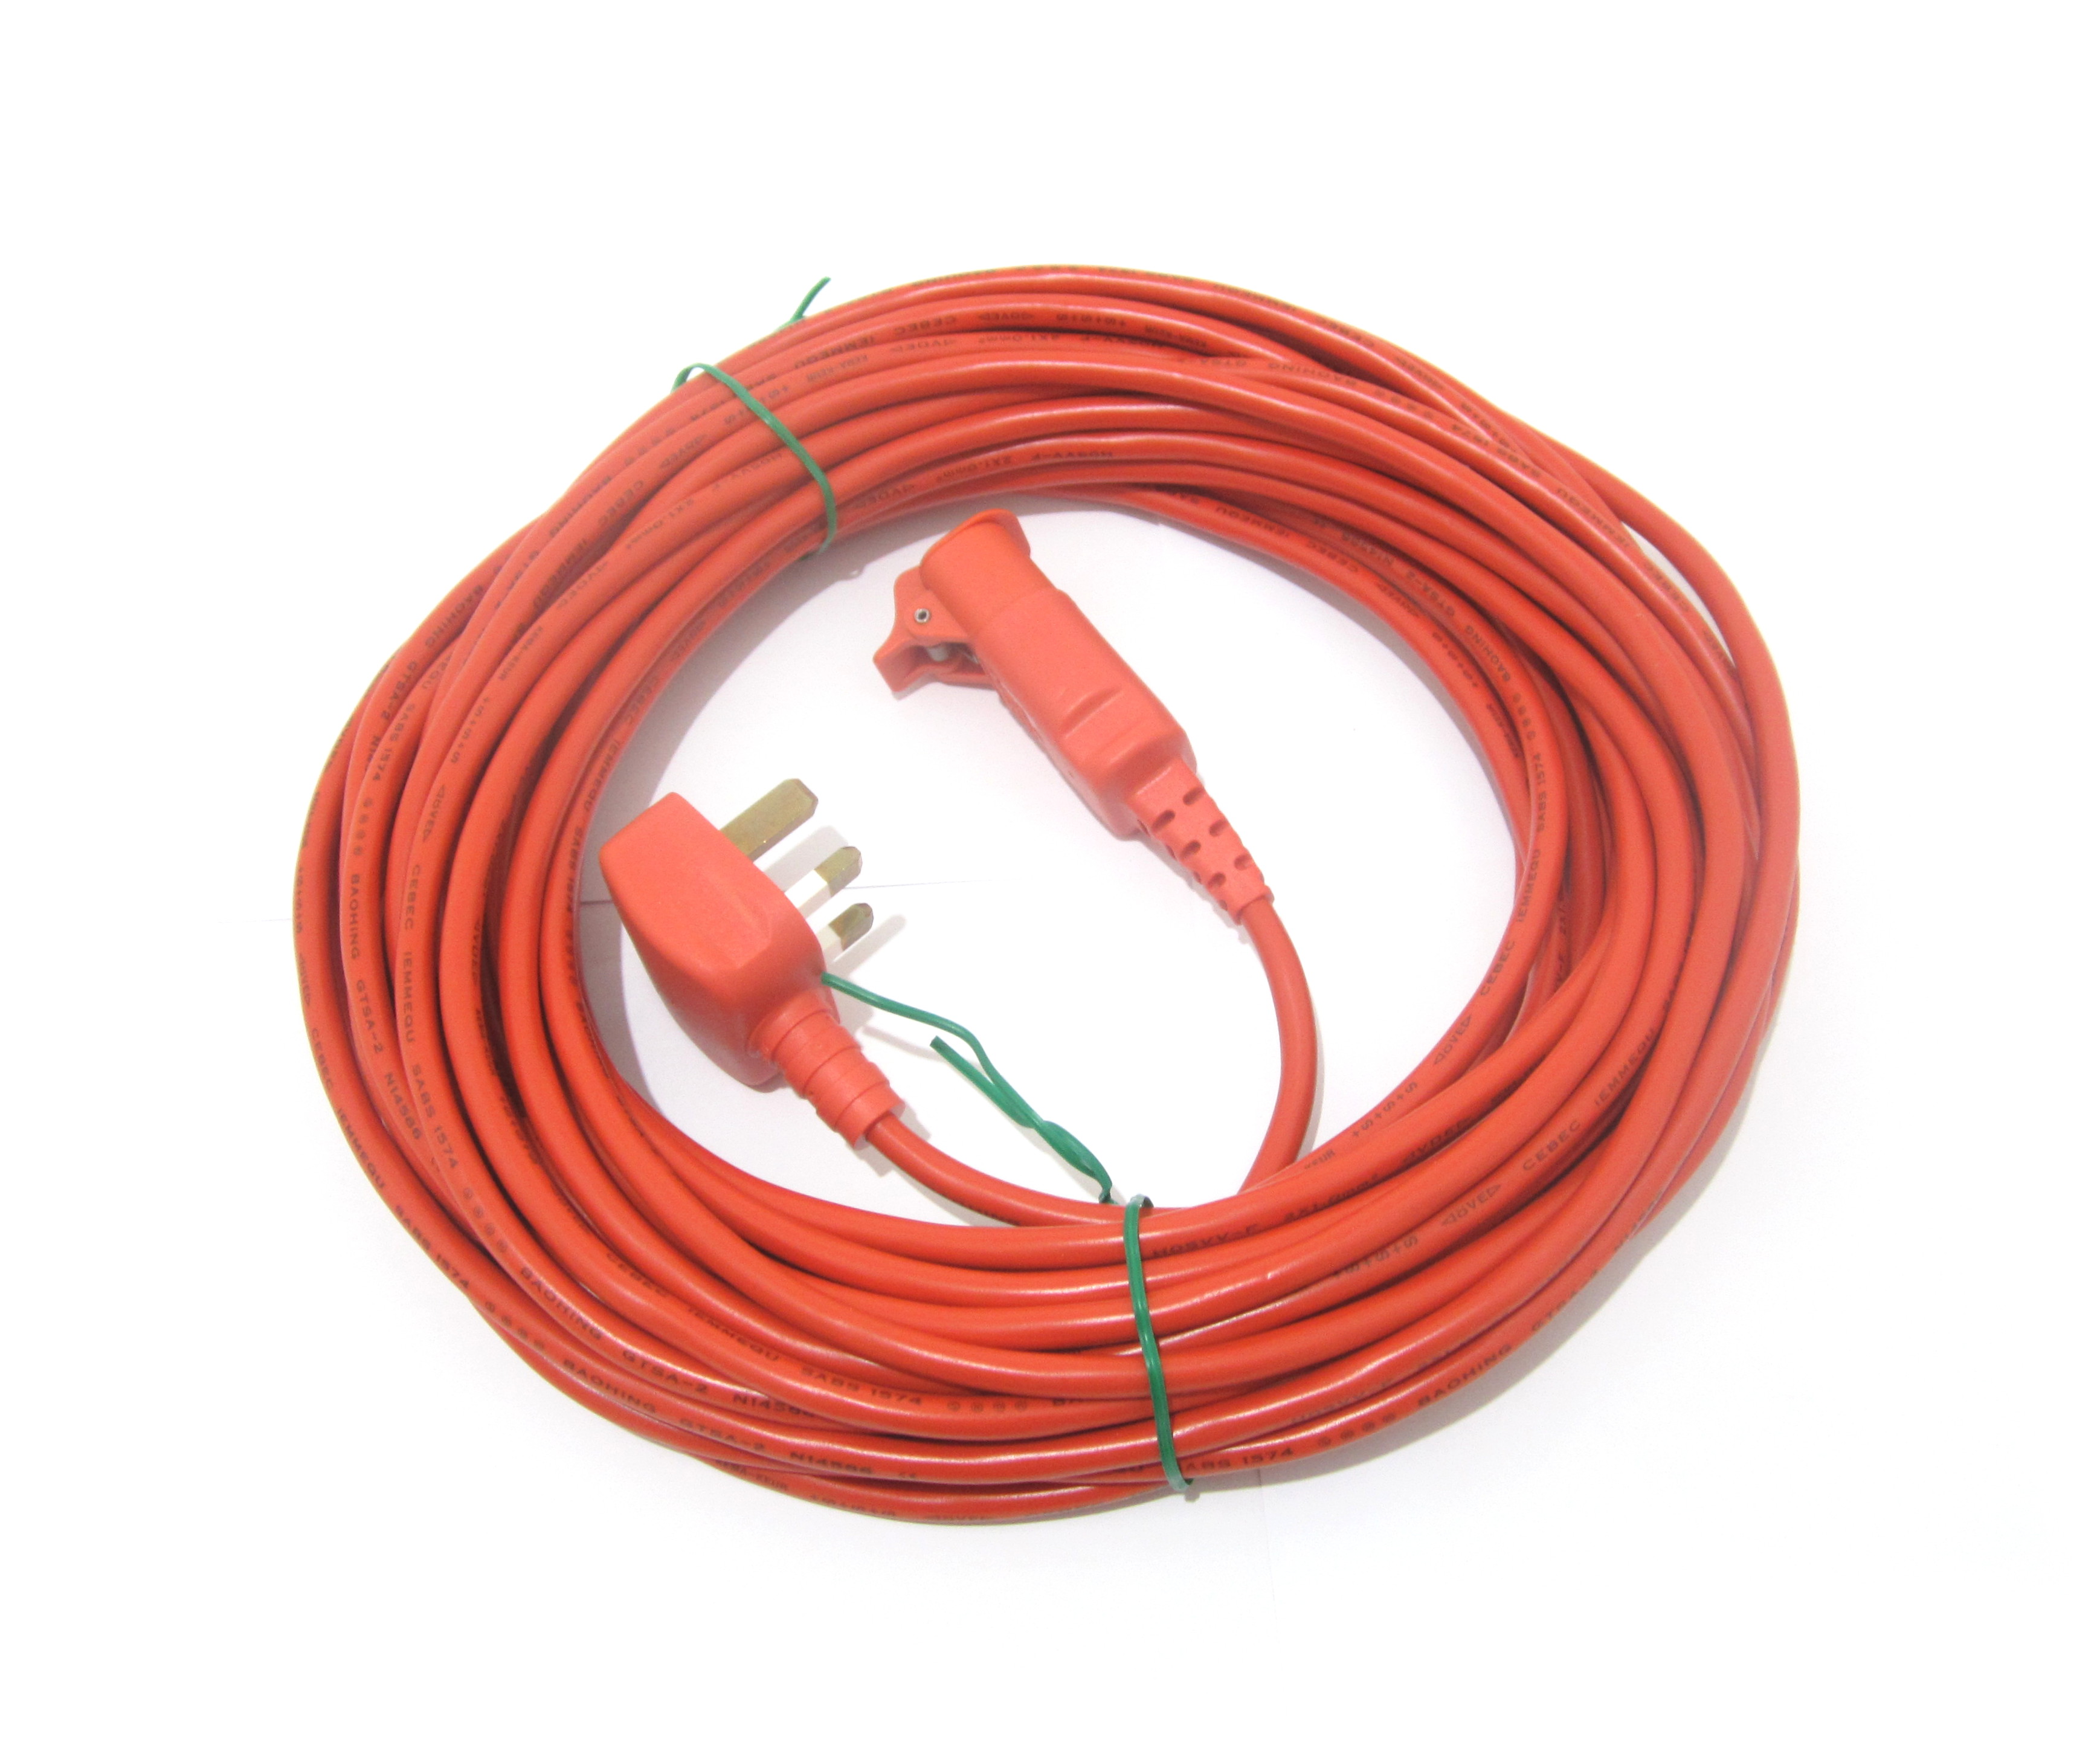 Black & Decker Extension Cables / Leads